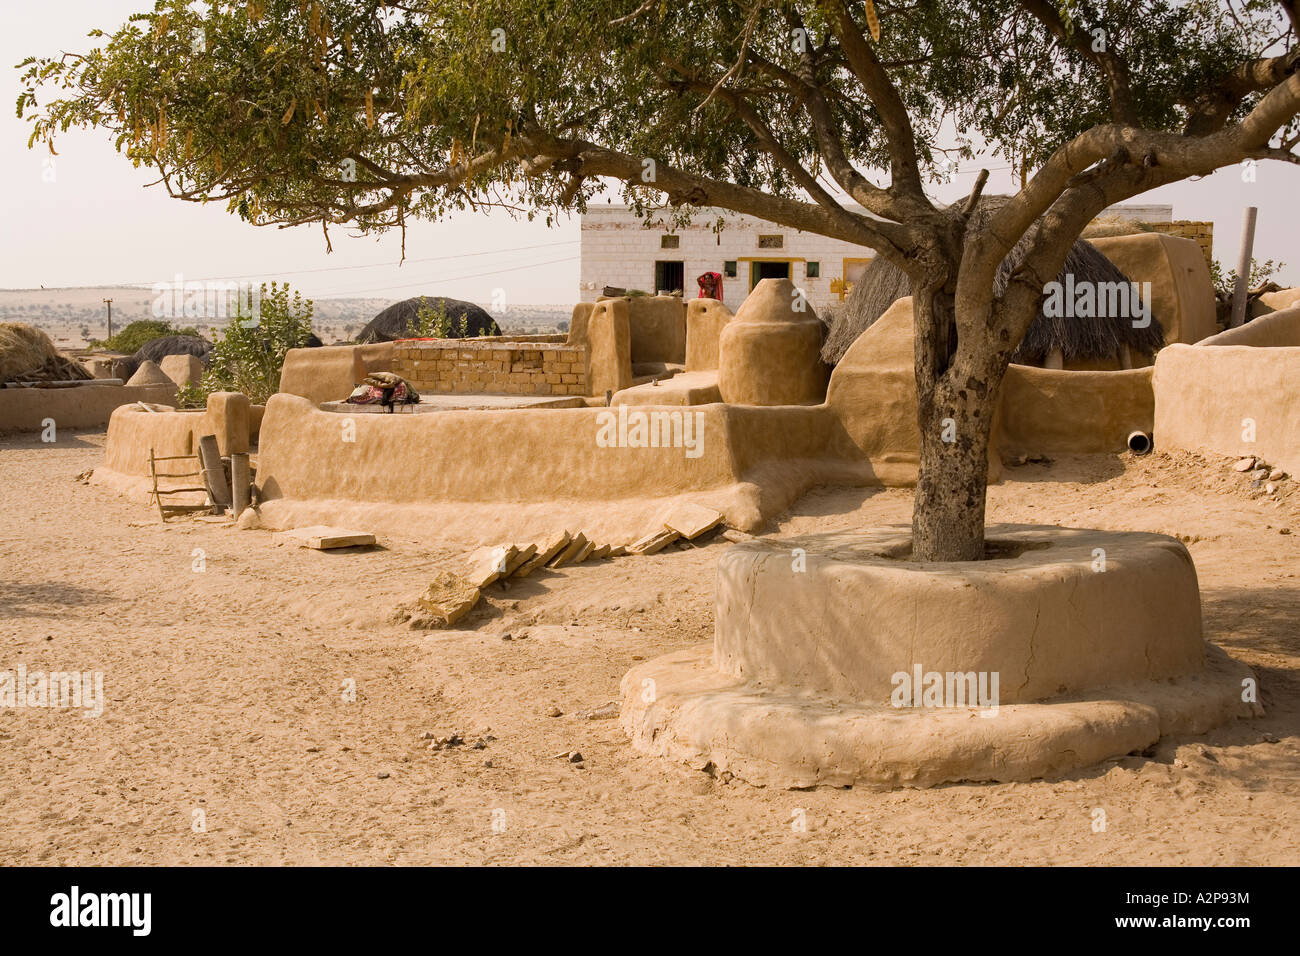 India Rajasthan Thar Desert mud rendered village houses around central tree Stock Photo